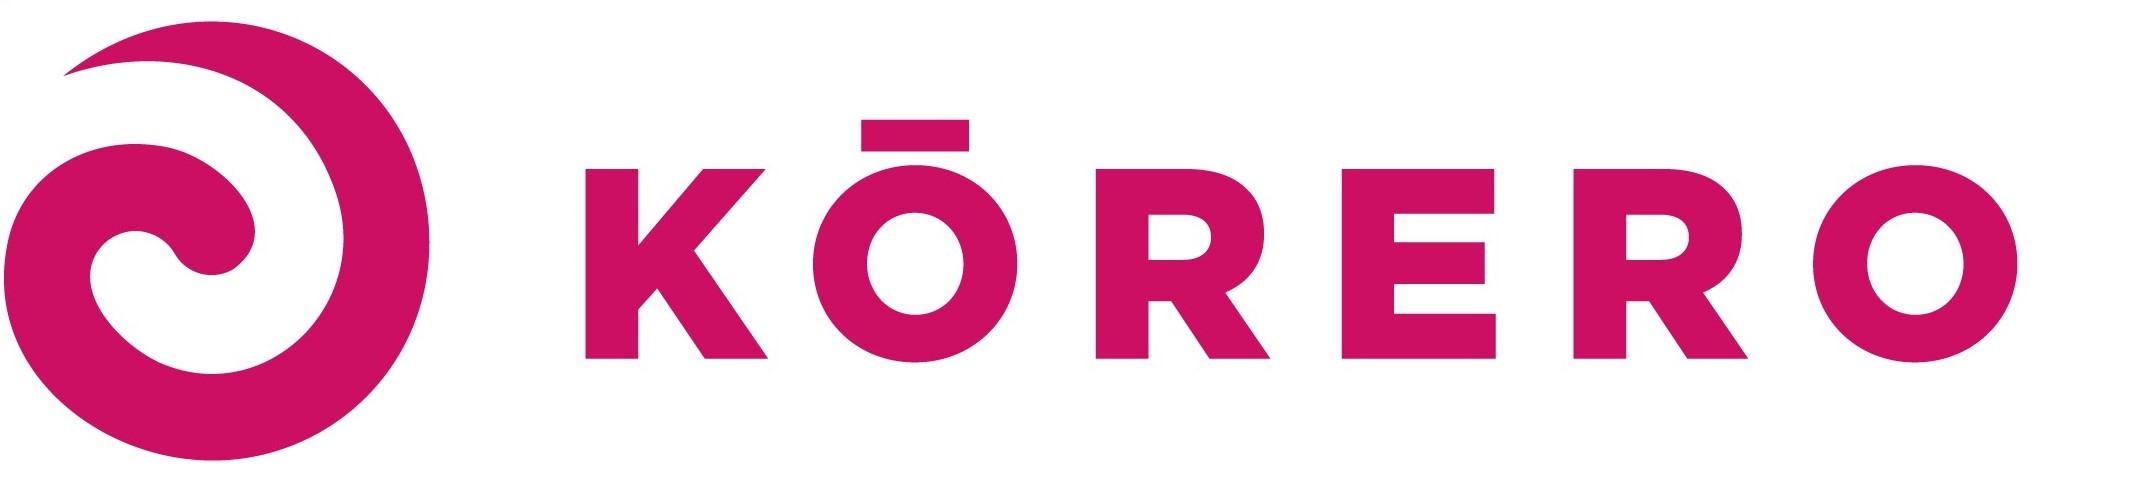 cropped-korero-logo-v2